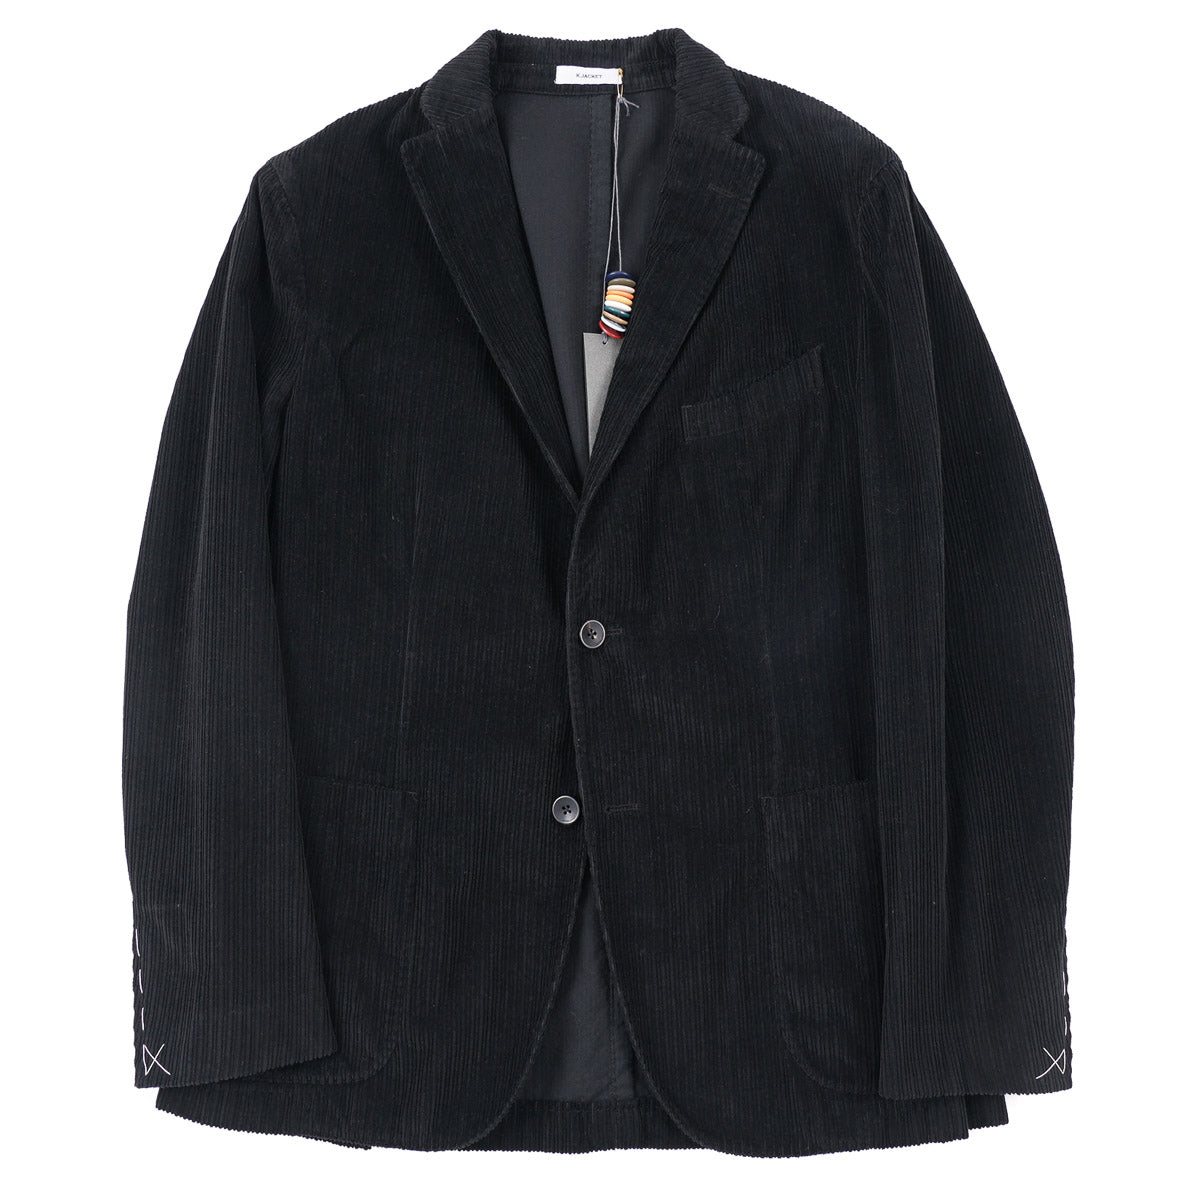 Boglioli Soft Corduroy 'K Jacket' Sport Coat - Top Shelf Apparel